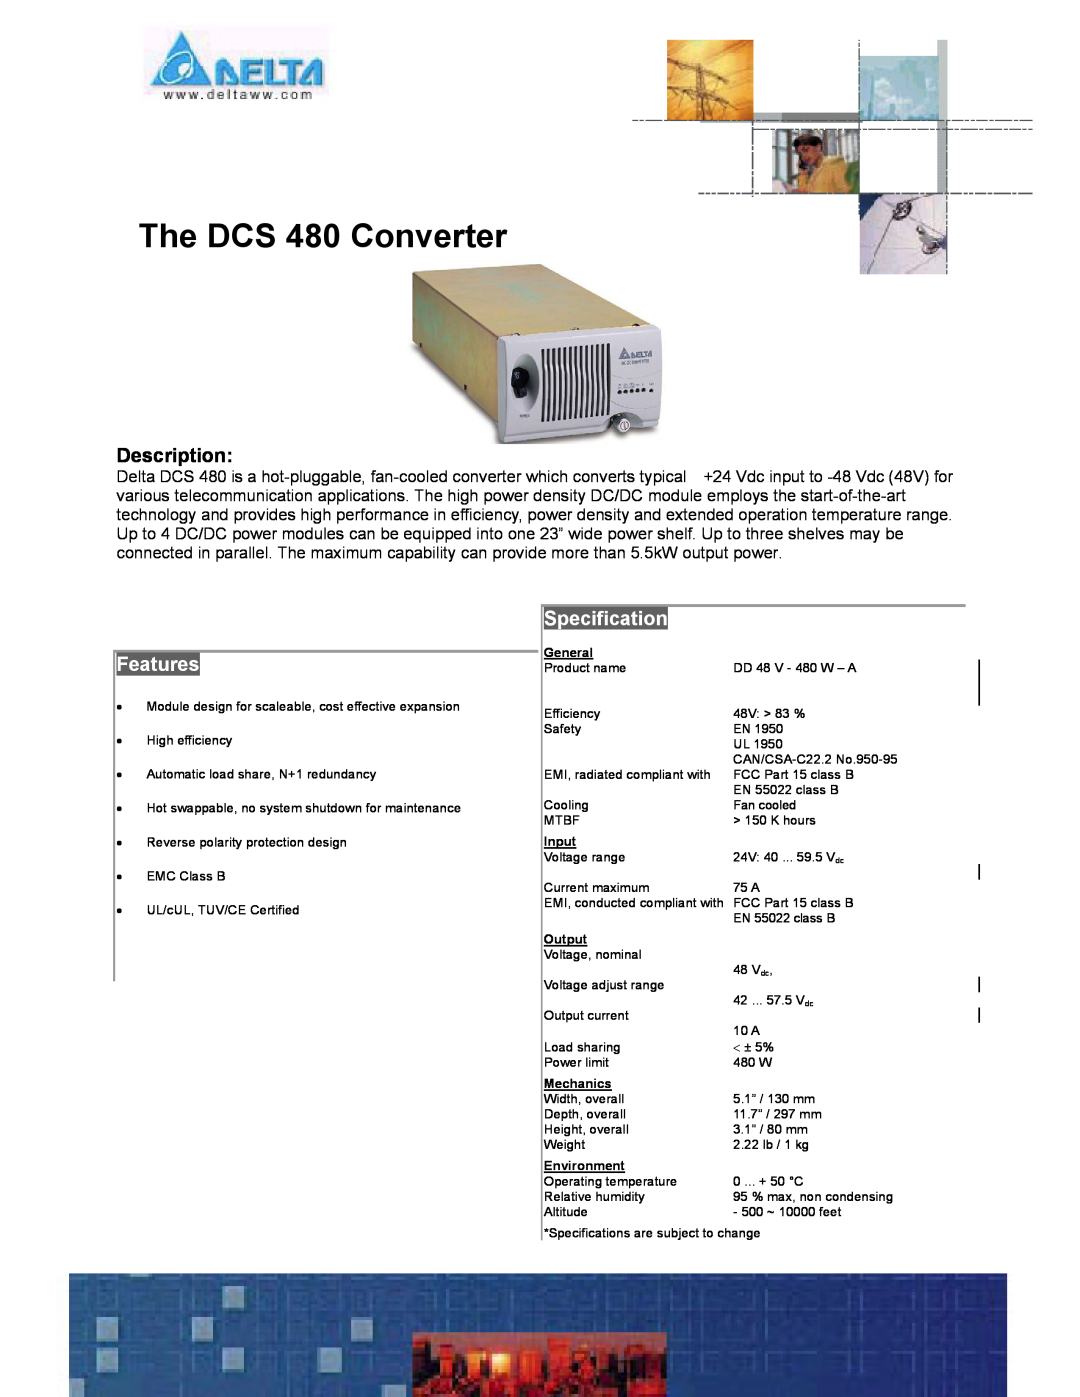 Delta specifications The DCS 480 Converter, Description, Features, Specification 